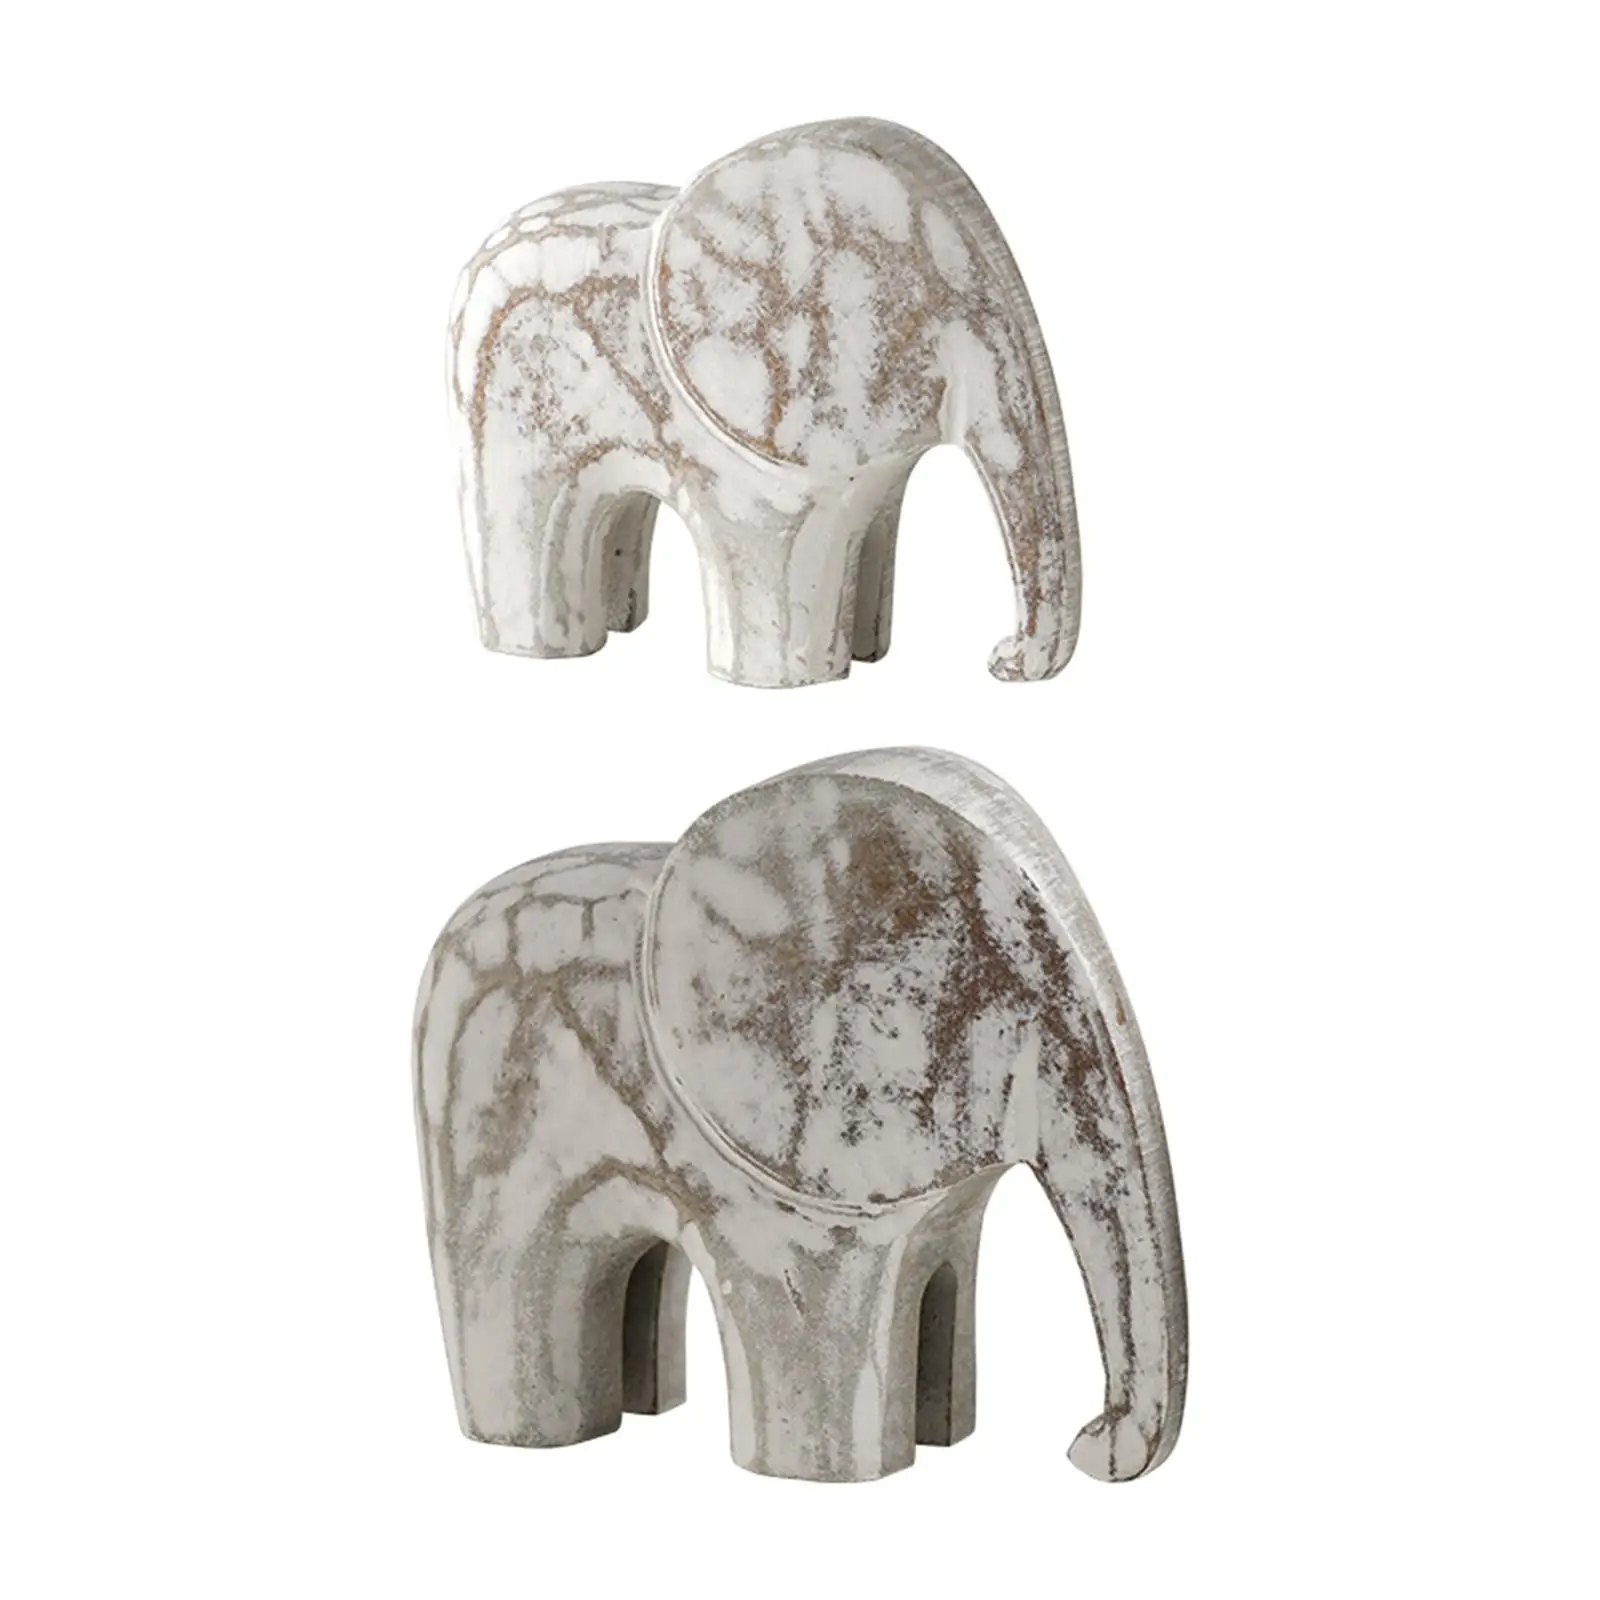 Handmade Elephant Statue Art Craft Animal Ornament Furnishing 1Pair for Bookshelf Office Desktop Home Living Room Decorative